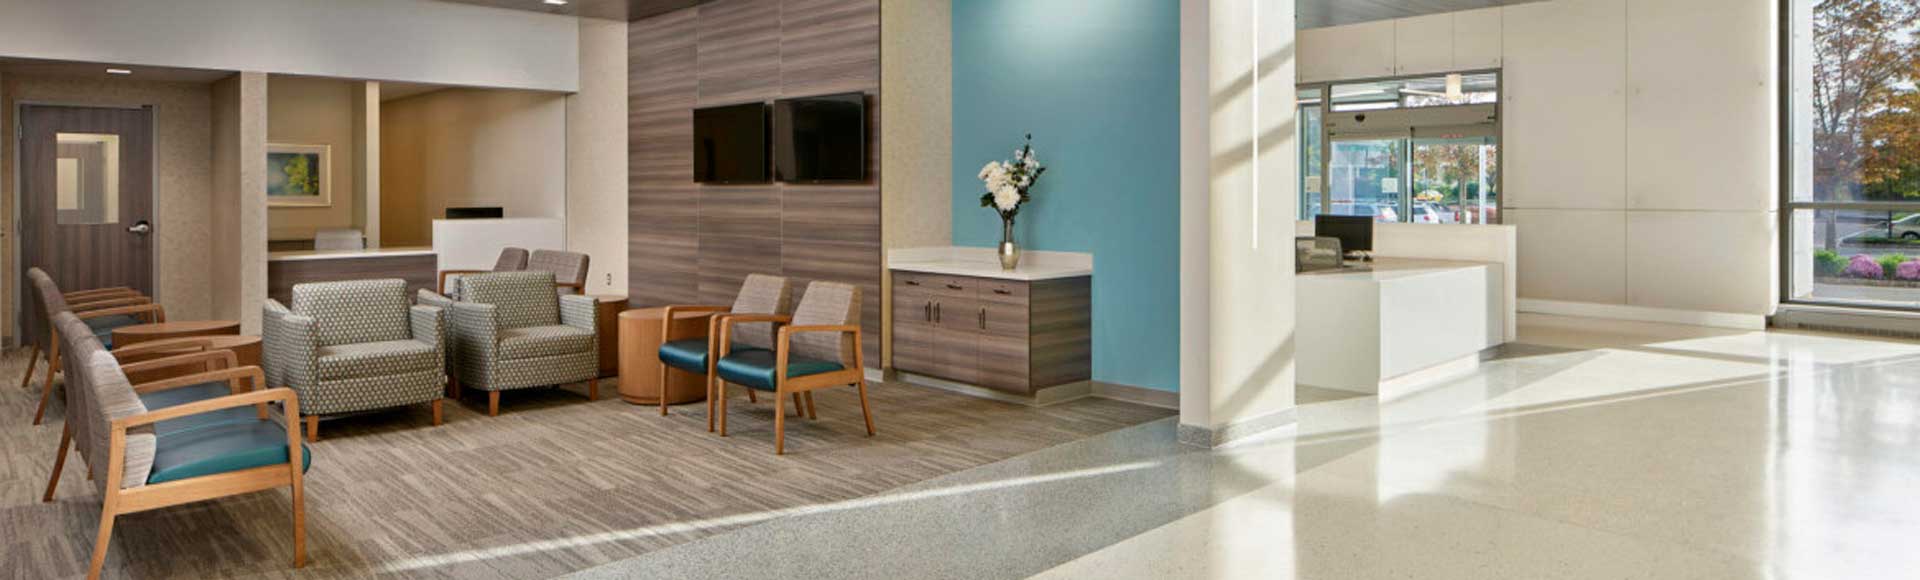 Interior Design and Furniture for Healthcare